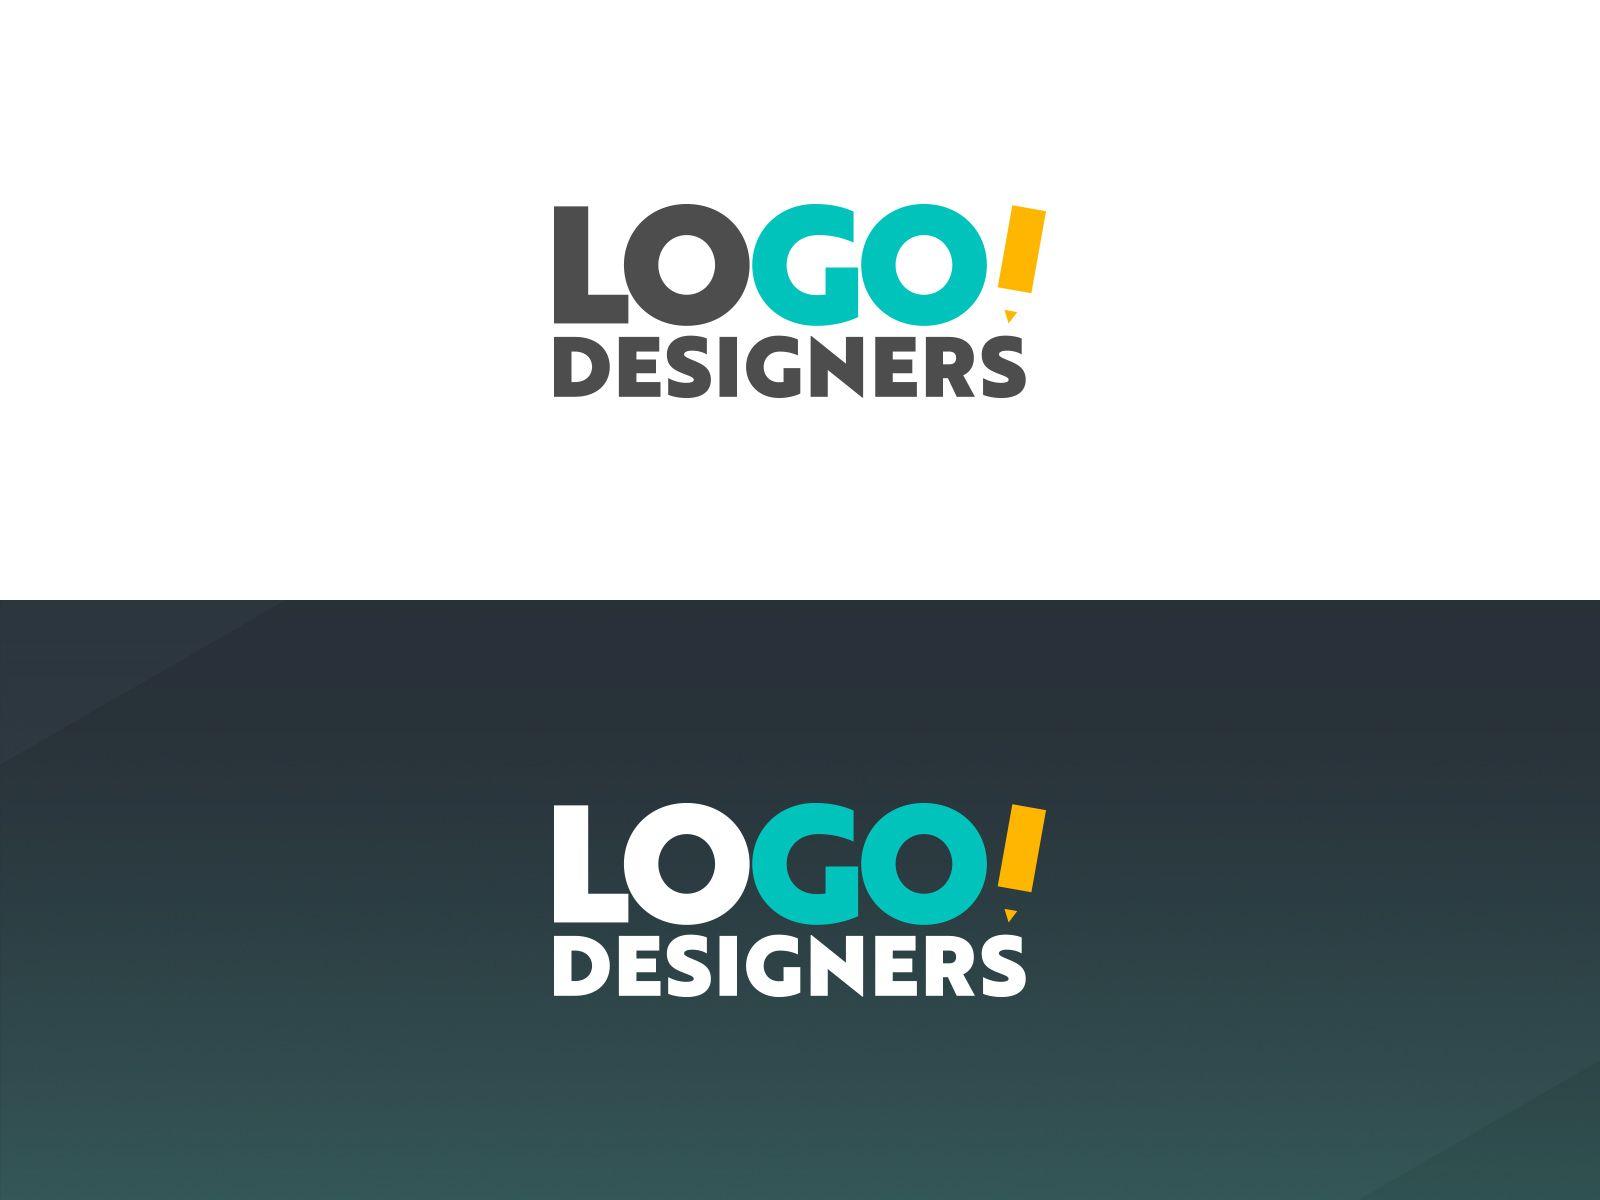 Designers Logo - Logo Designers by Marco Sarracino Feeling